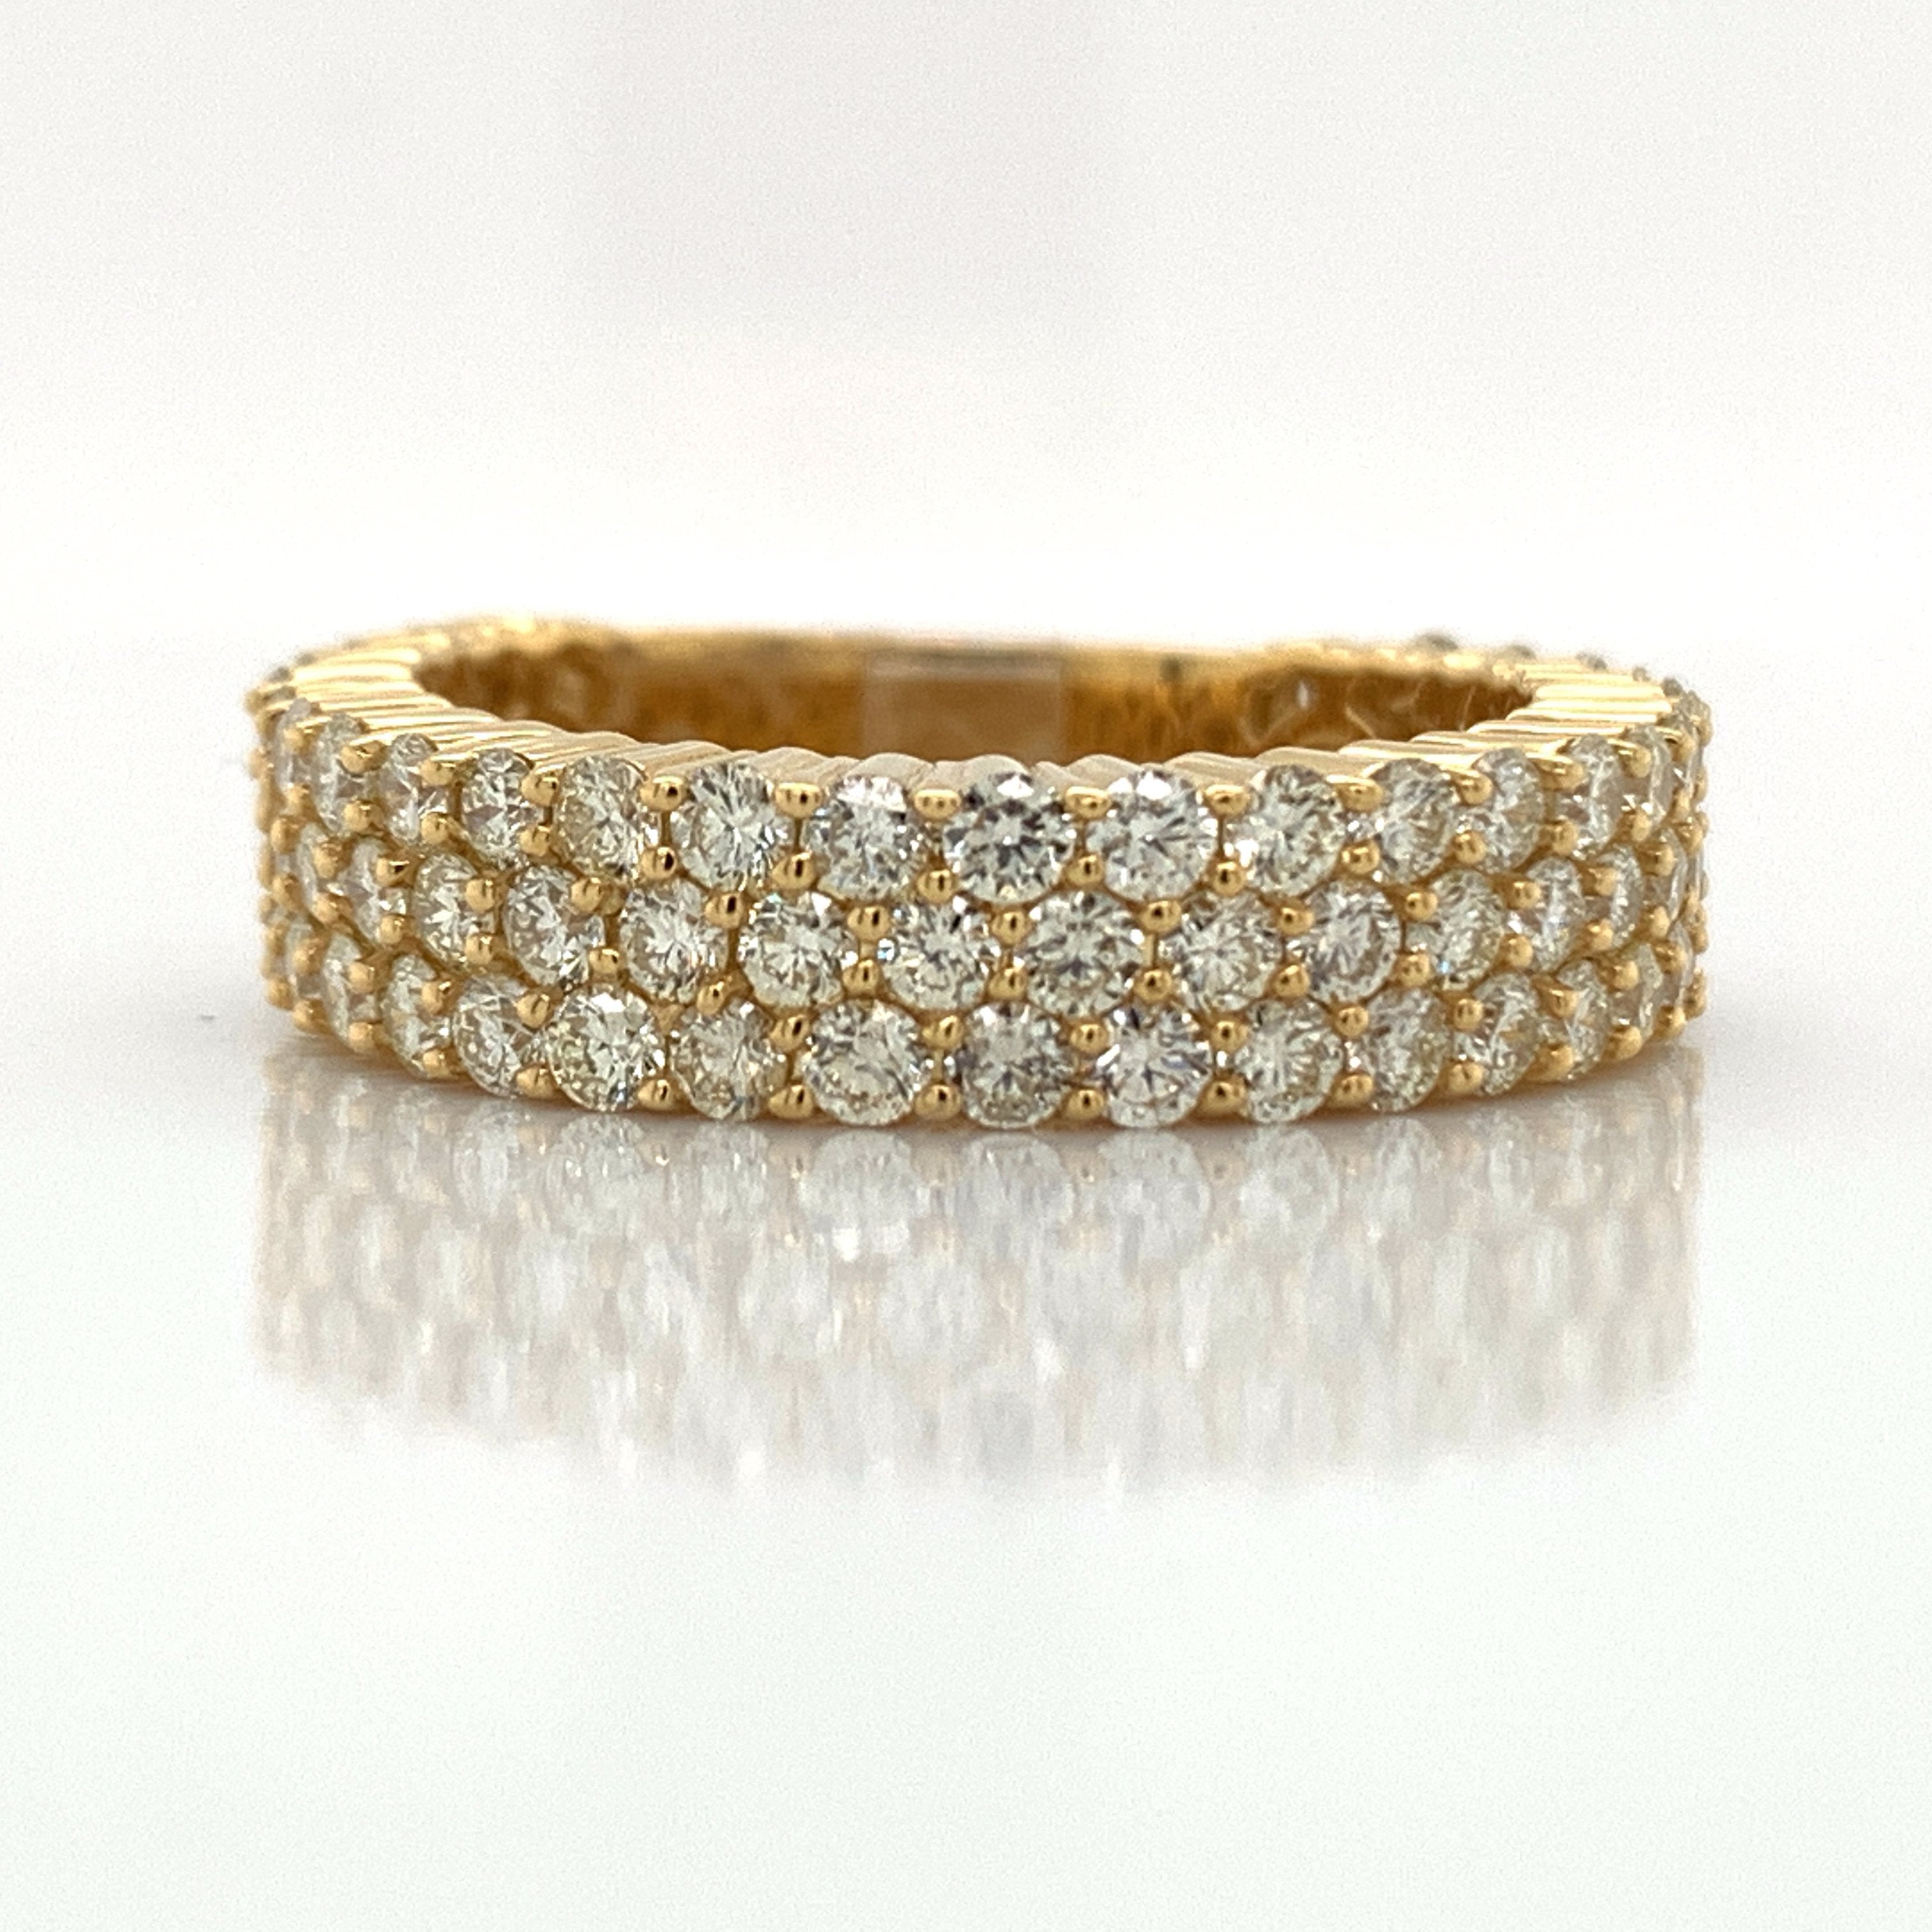 3.04 CT. Diamond Ring in 10K Gold - White Carat Diamonds 